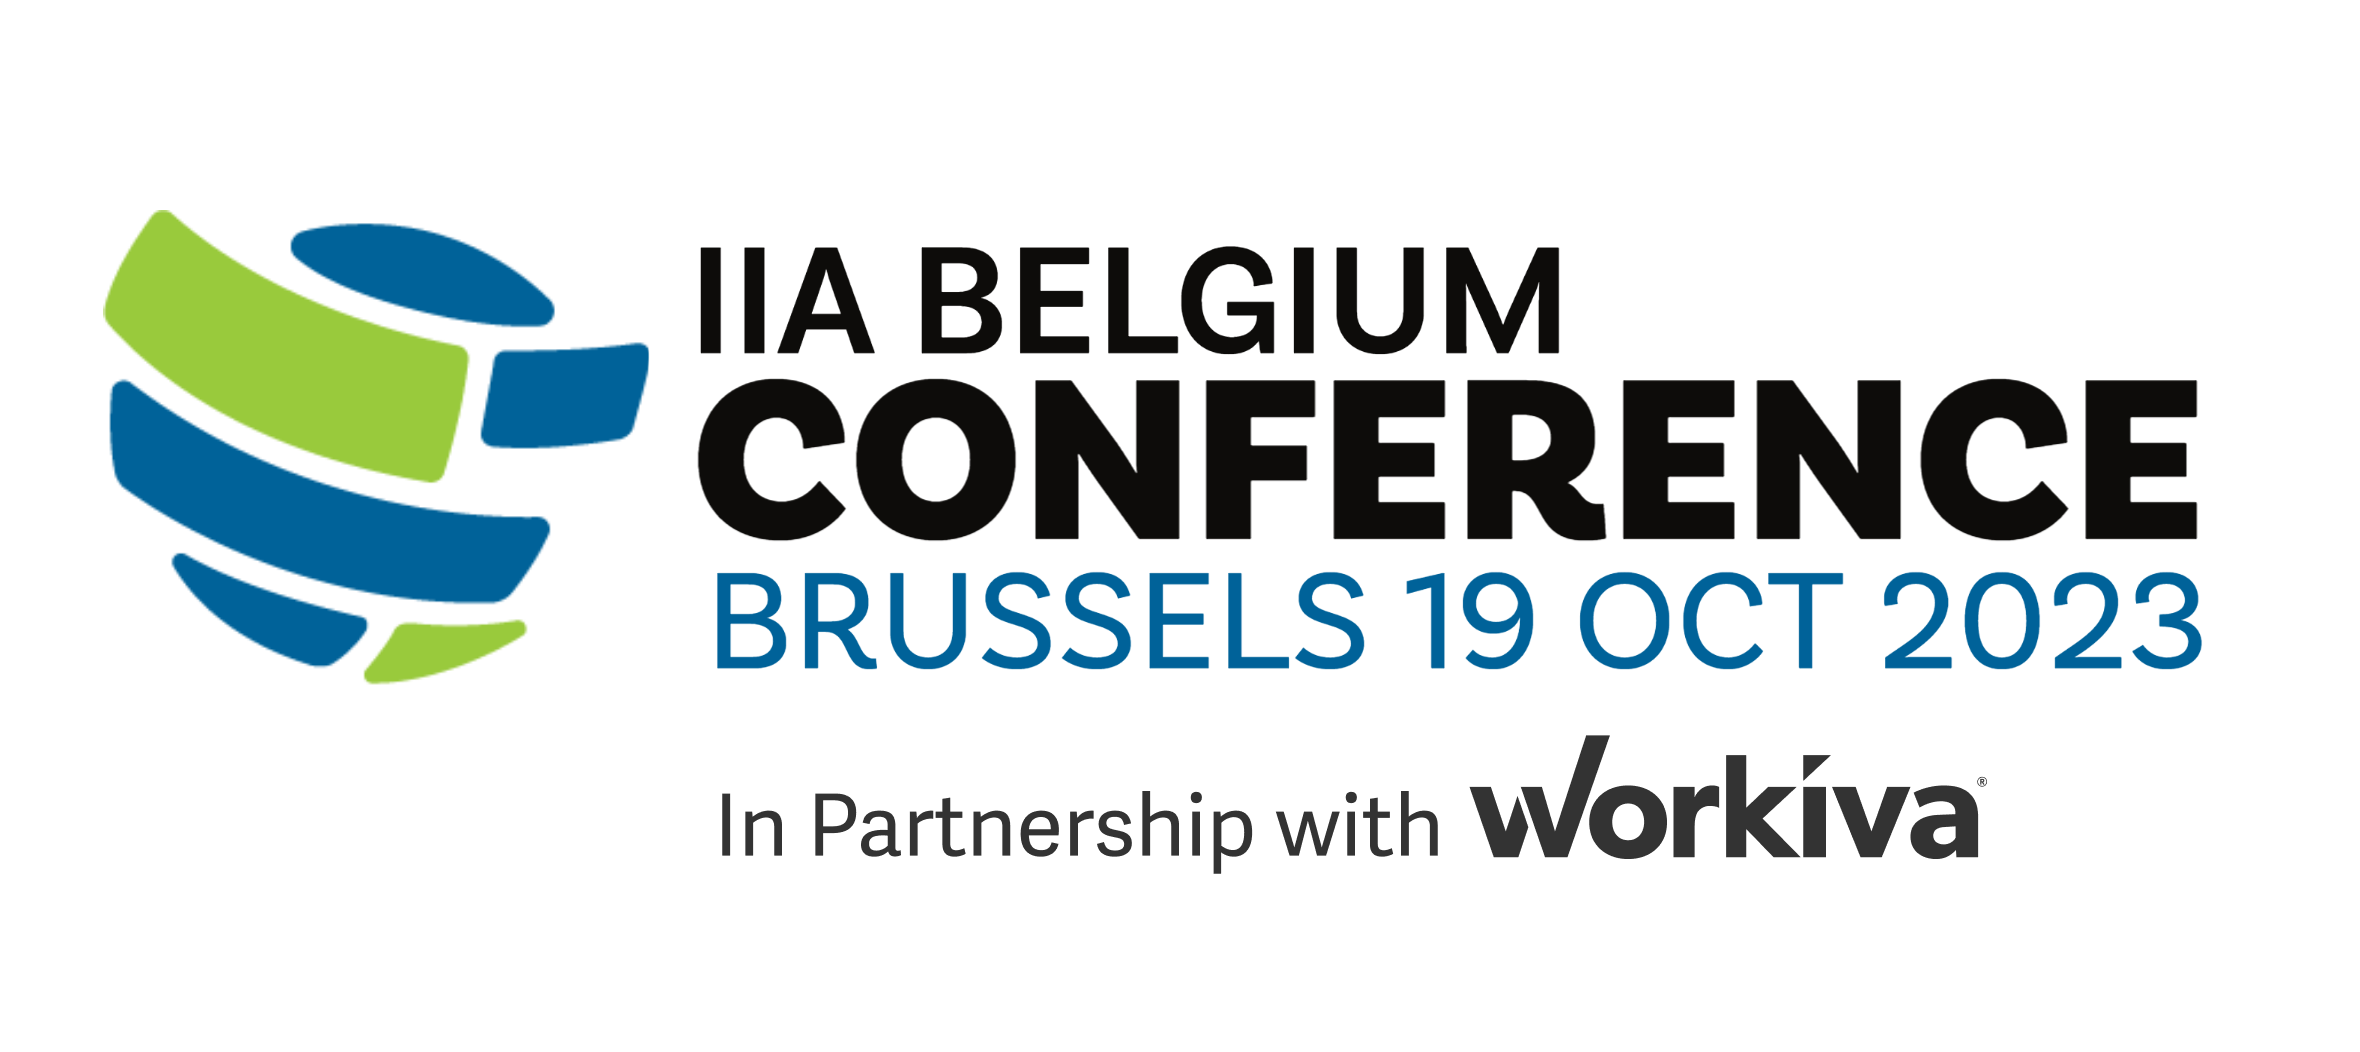 IIA Belgium Conference Logo in color